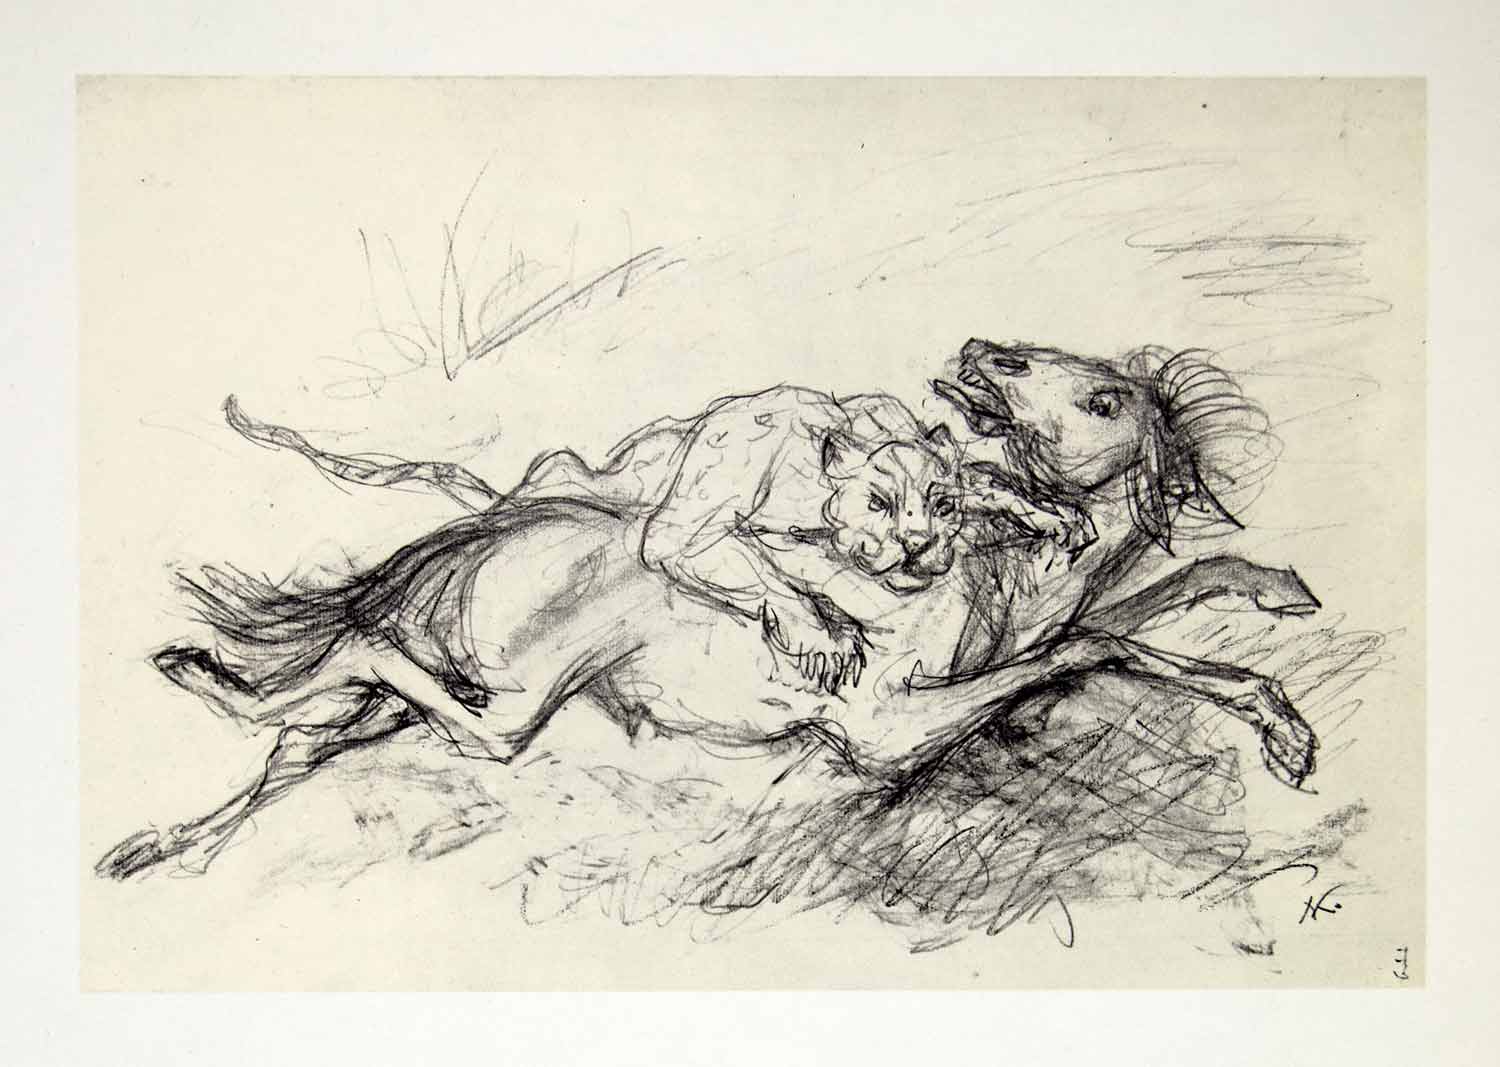 1969 Aquatone Print Alfred Kubin Art Jaguar Attacks Horse Wildlife Cruel XDG2